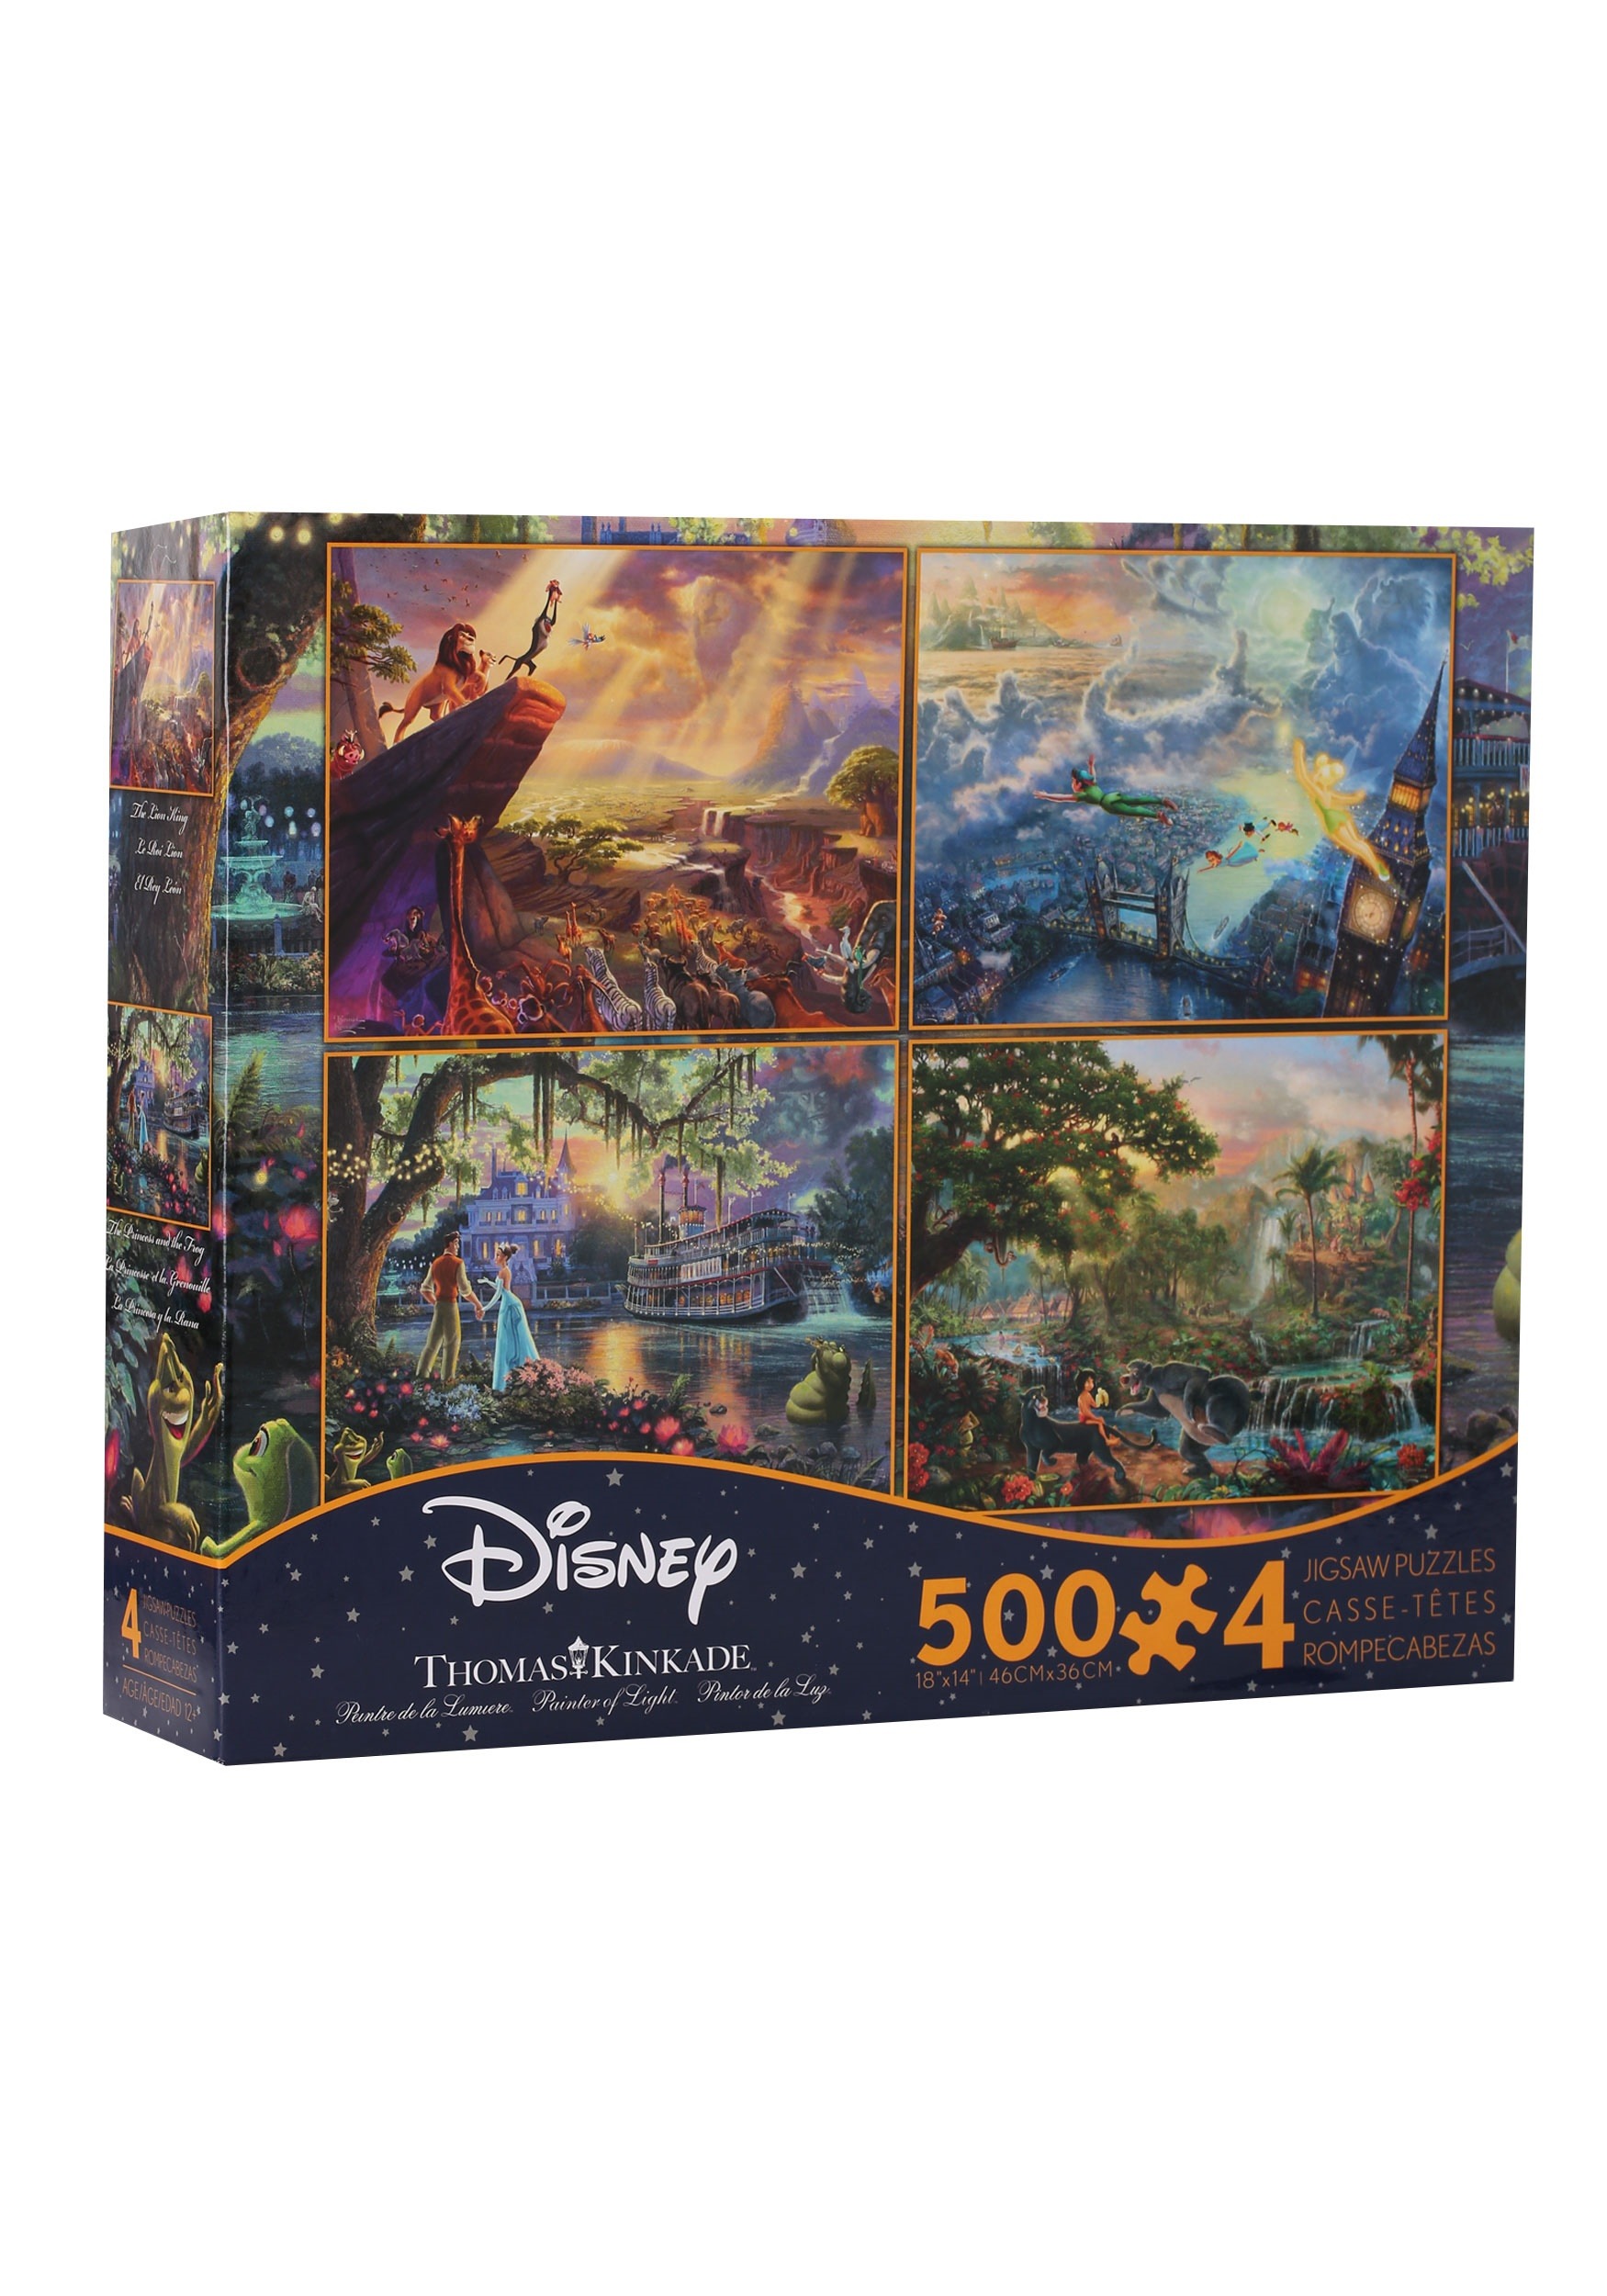 Disney Dreams Thomas Kinkade 500 Piece Puzzles Collection - Set of 4